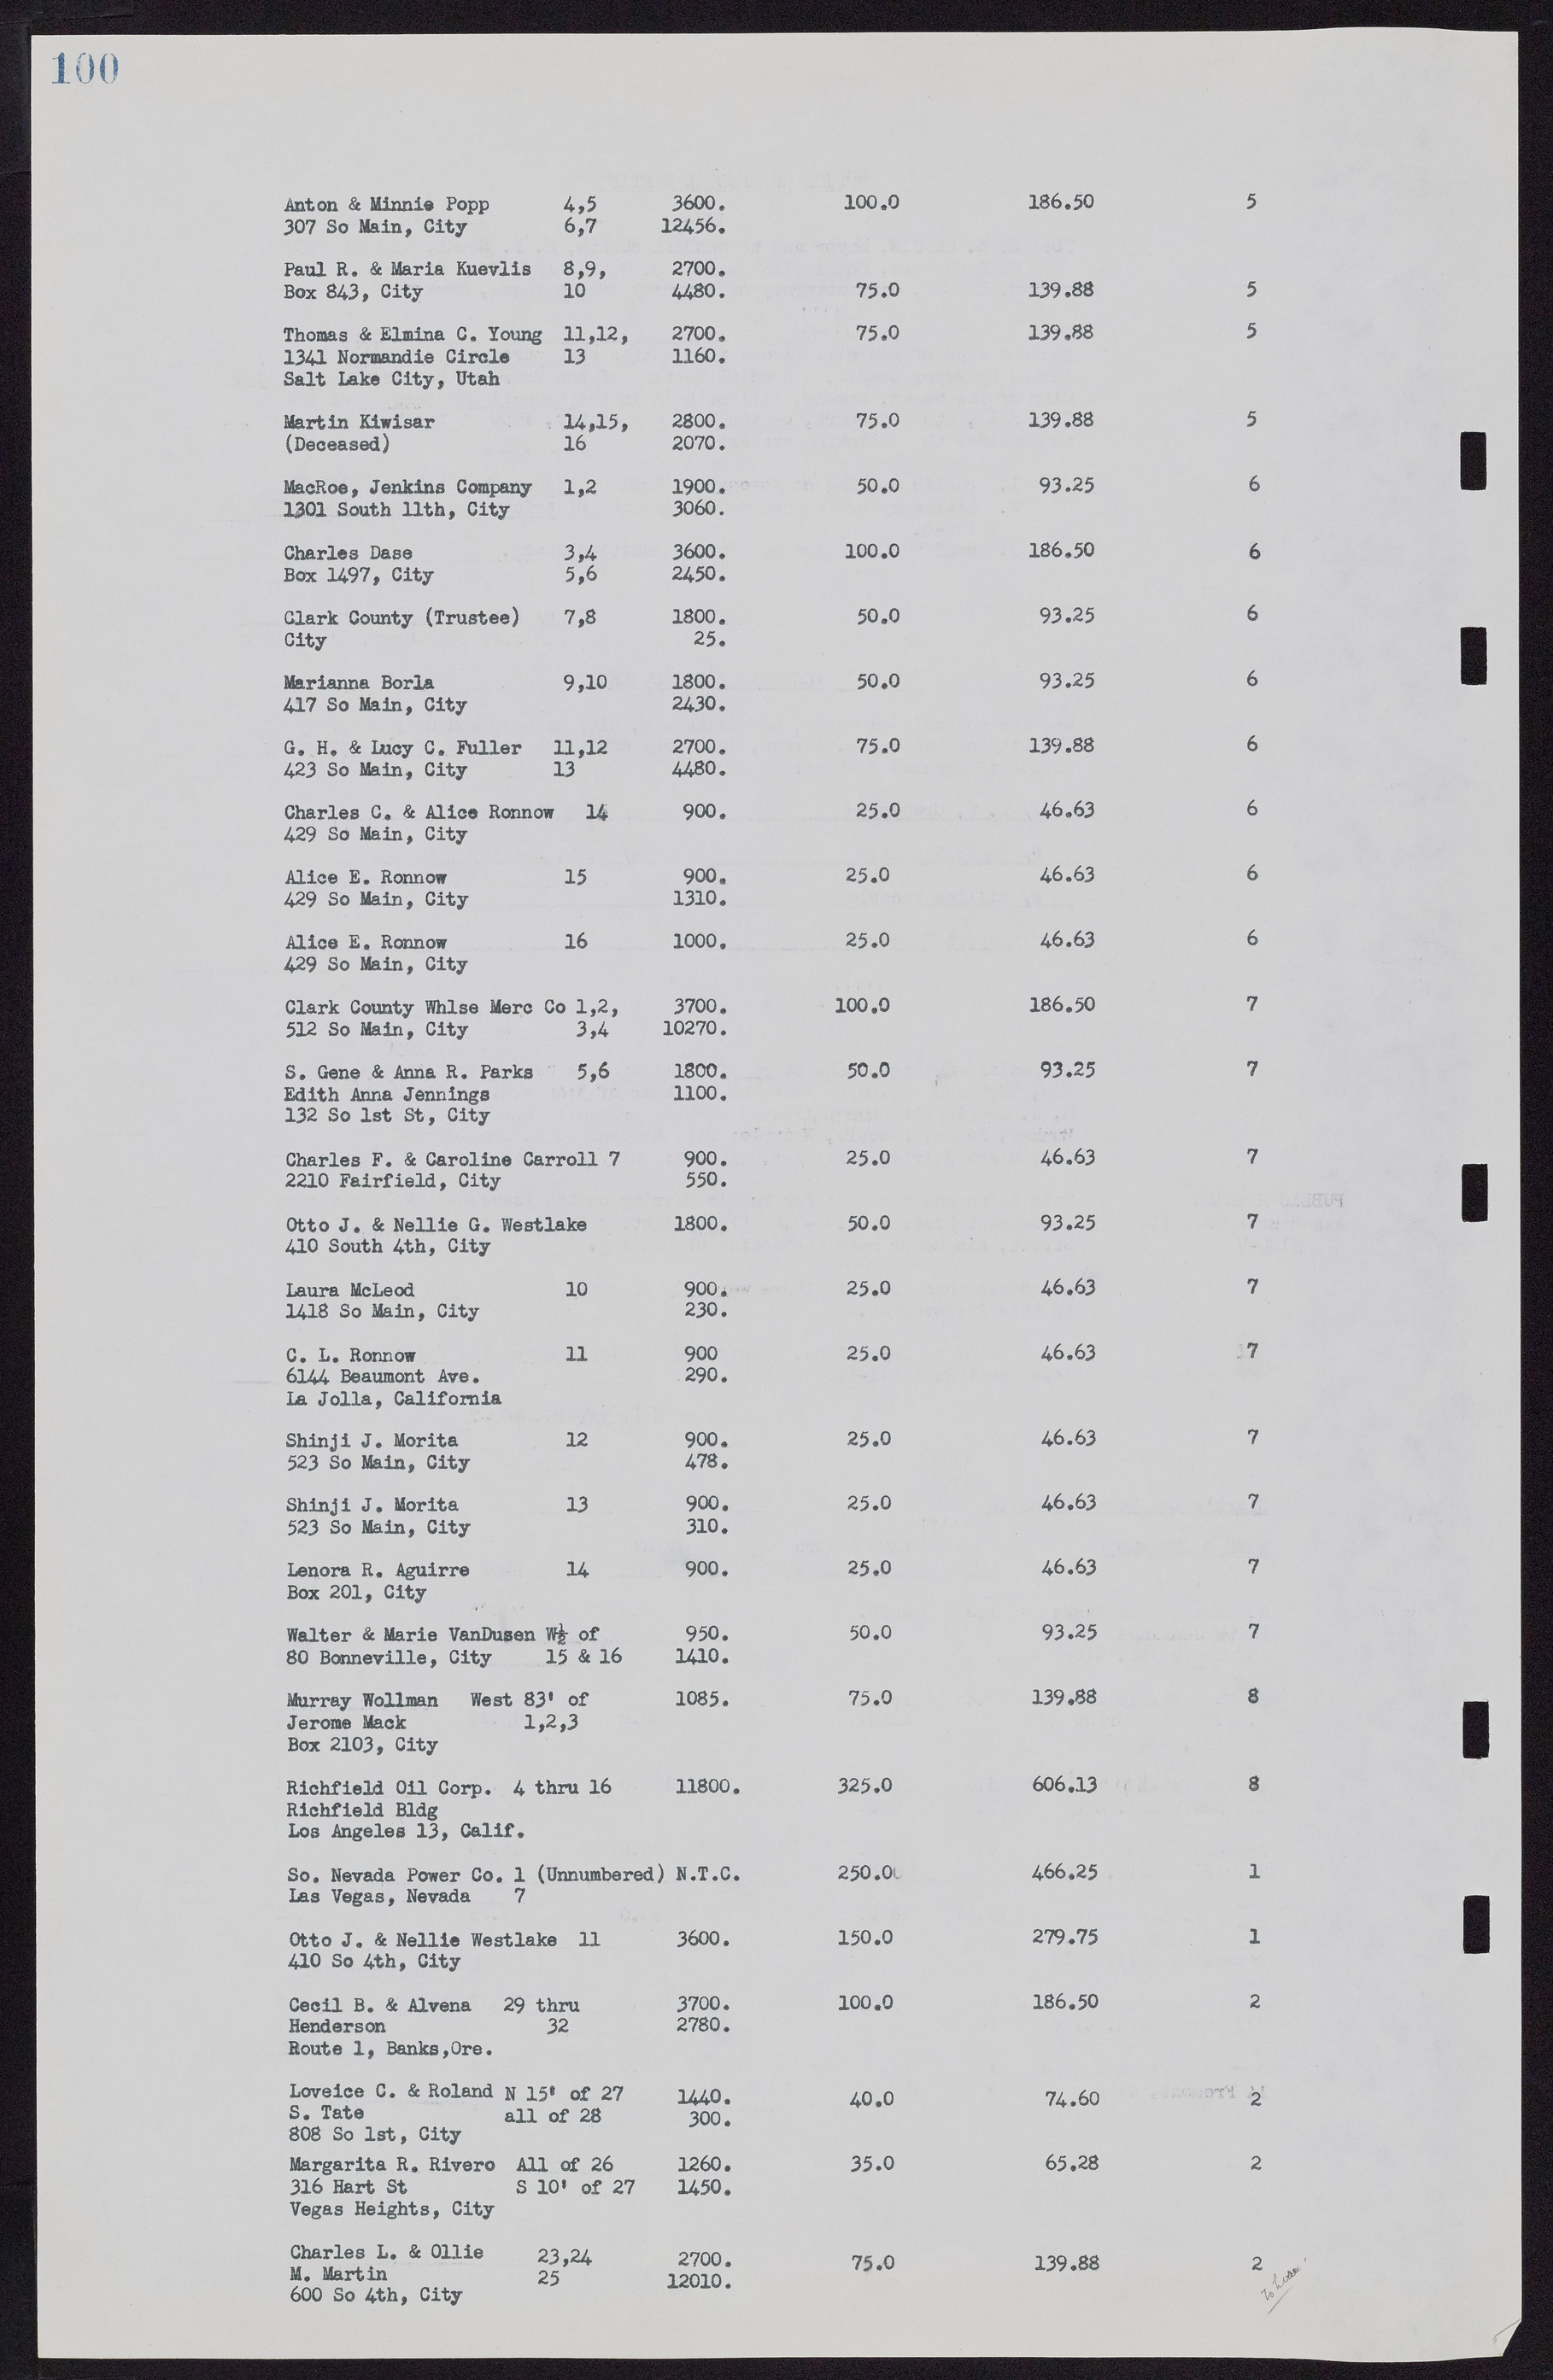 Las Vegas City Commission Minutes, November 7, 1949 to May 21, 1952, lvc000007-108